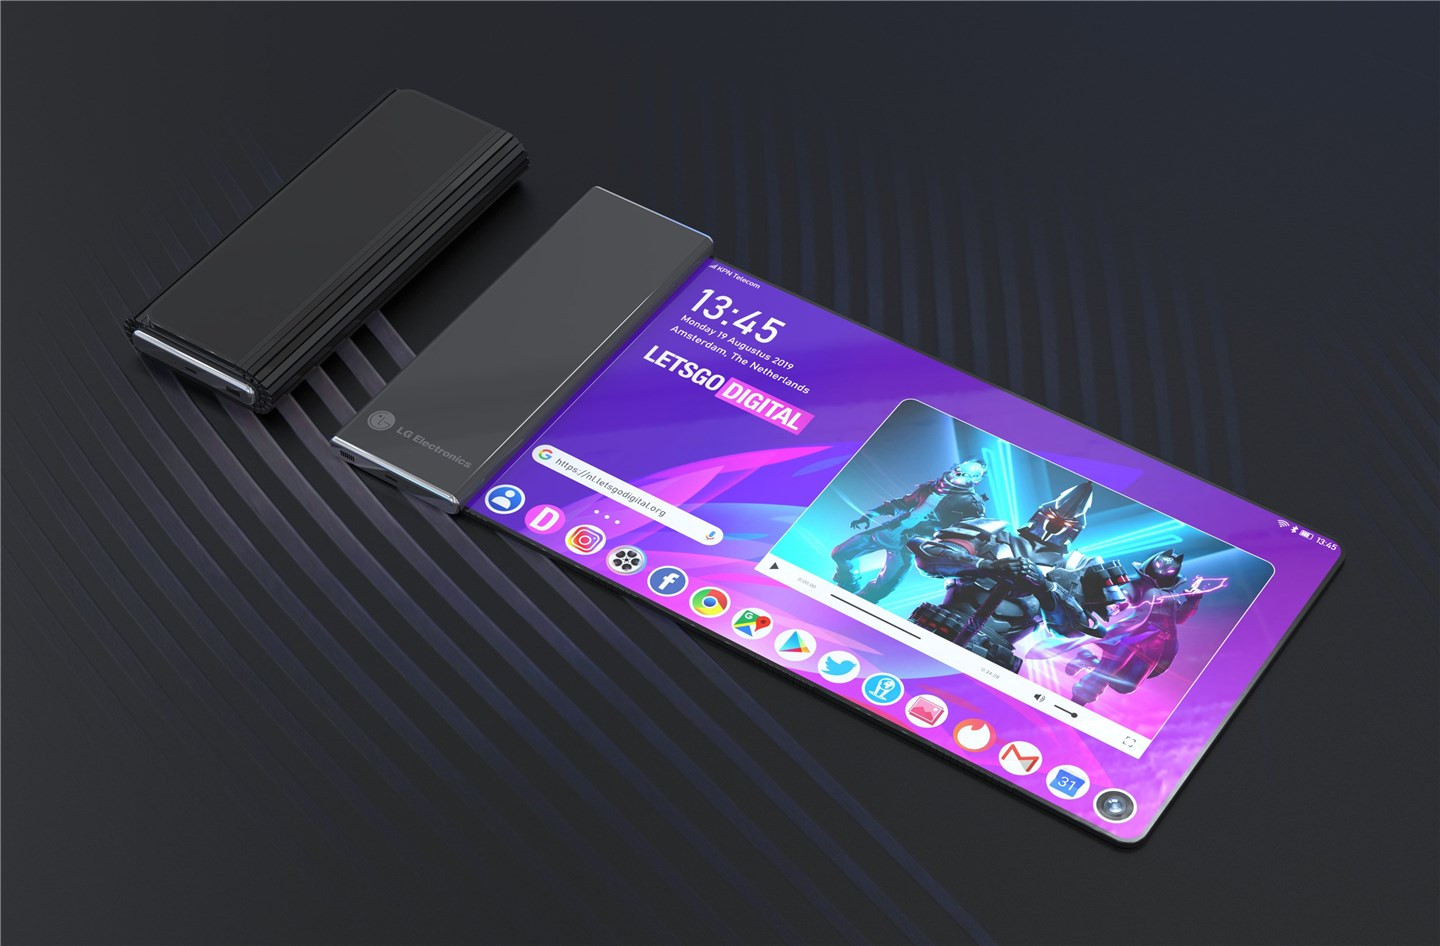 LG明年发布可卷曲的智能手机 京东方开发面板